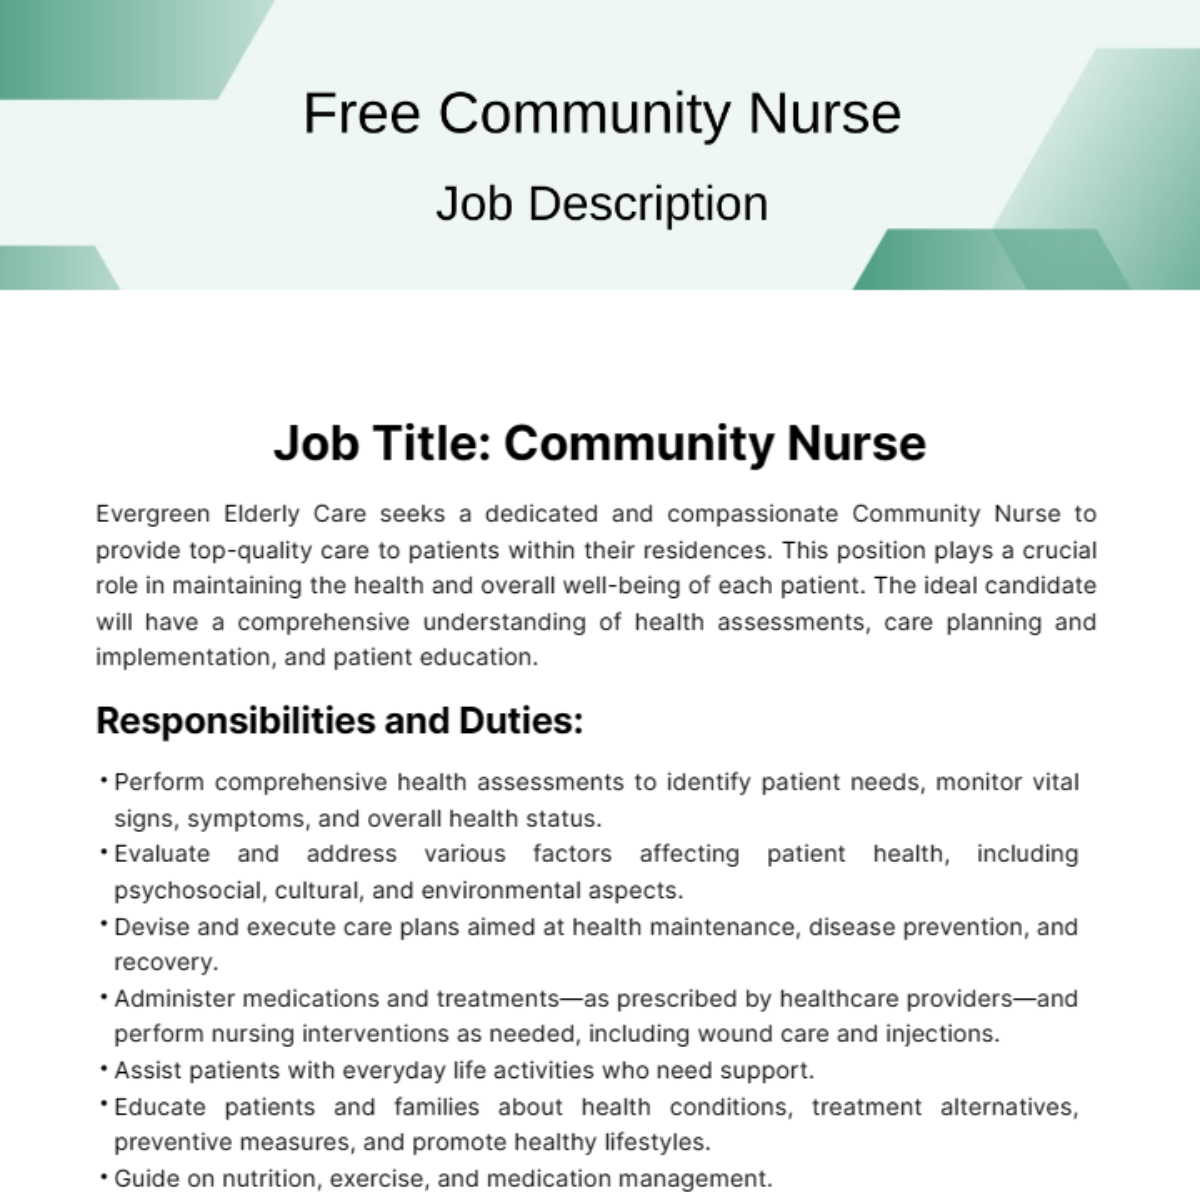 Free Community Nurse Job Description Template